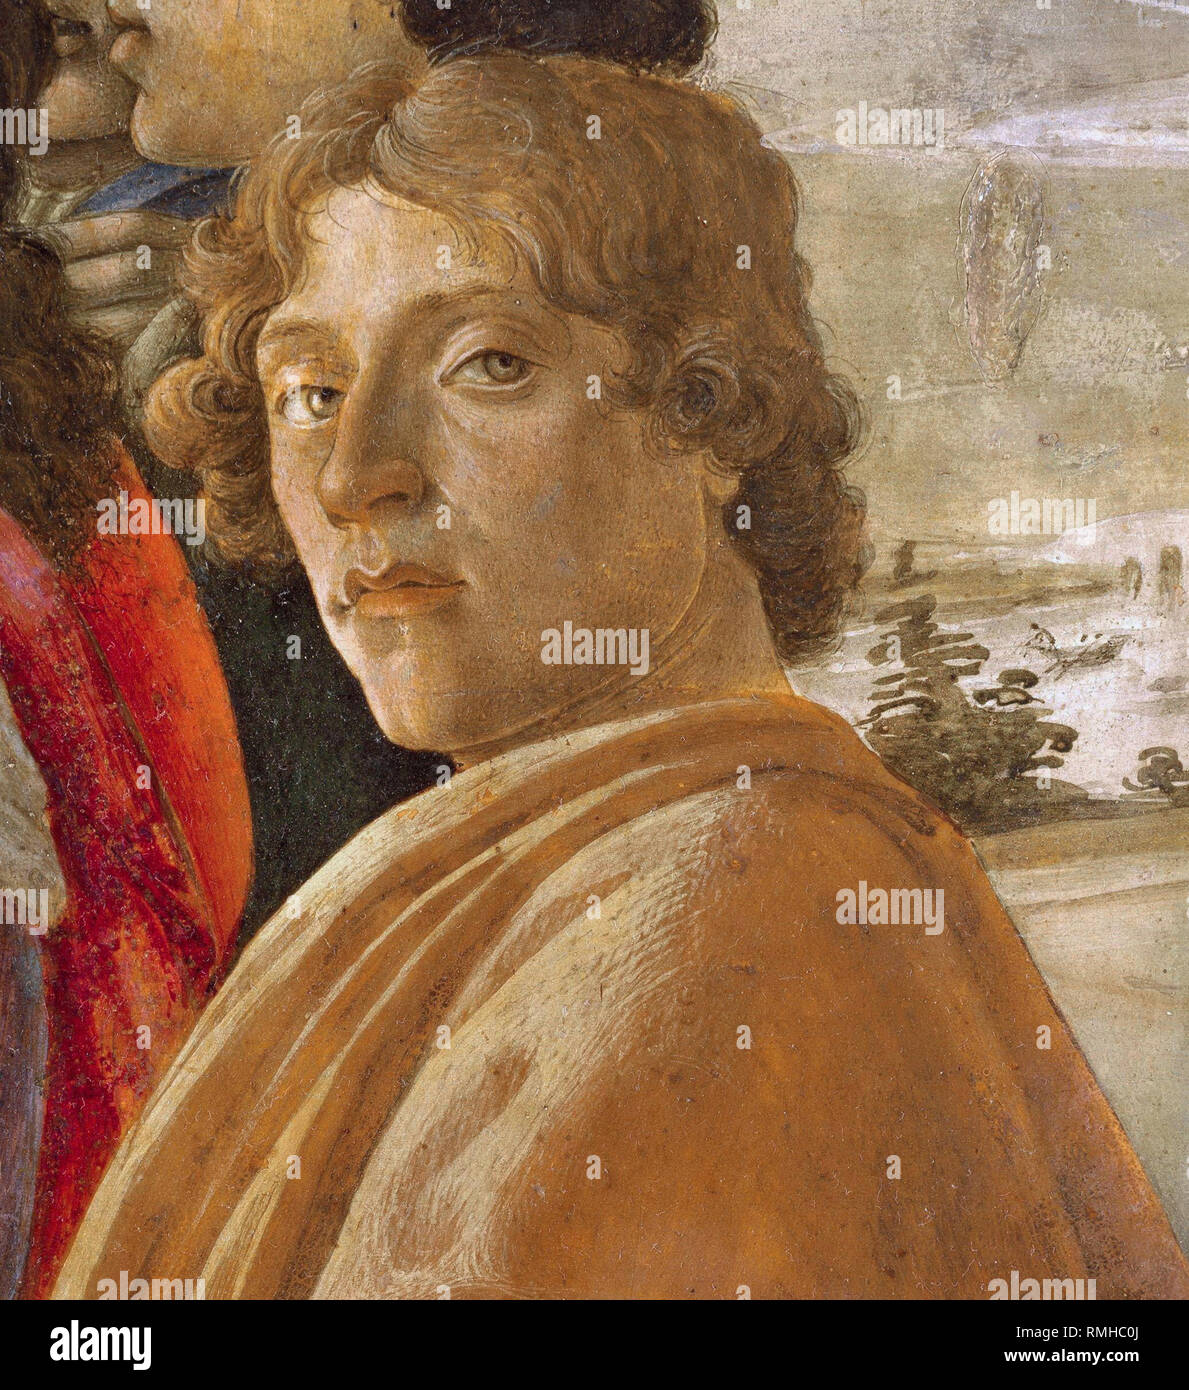 Botticelli, Alessandro di Mariano di Vanni Filipepi (1445-1510), Sandro Botticelli, italienischer Maler Künstler Stockfoto